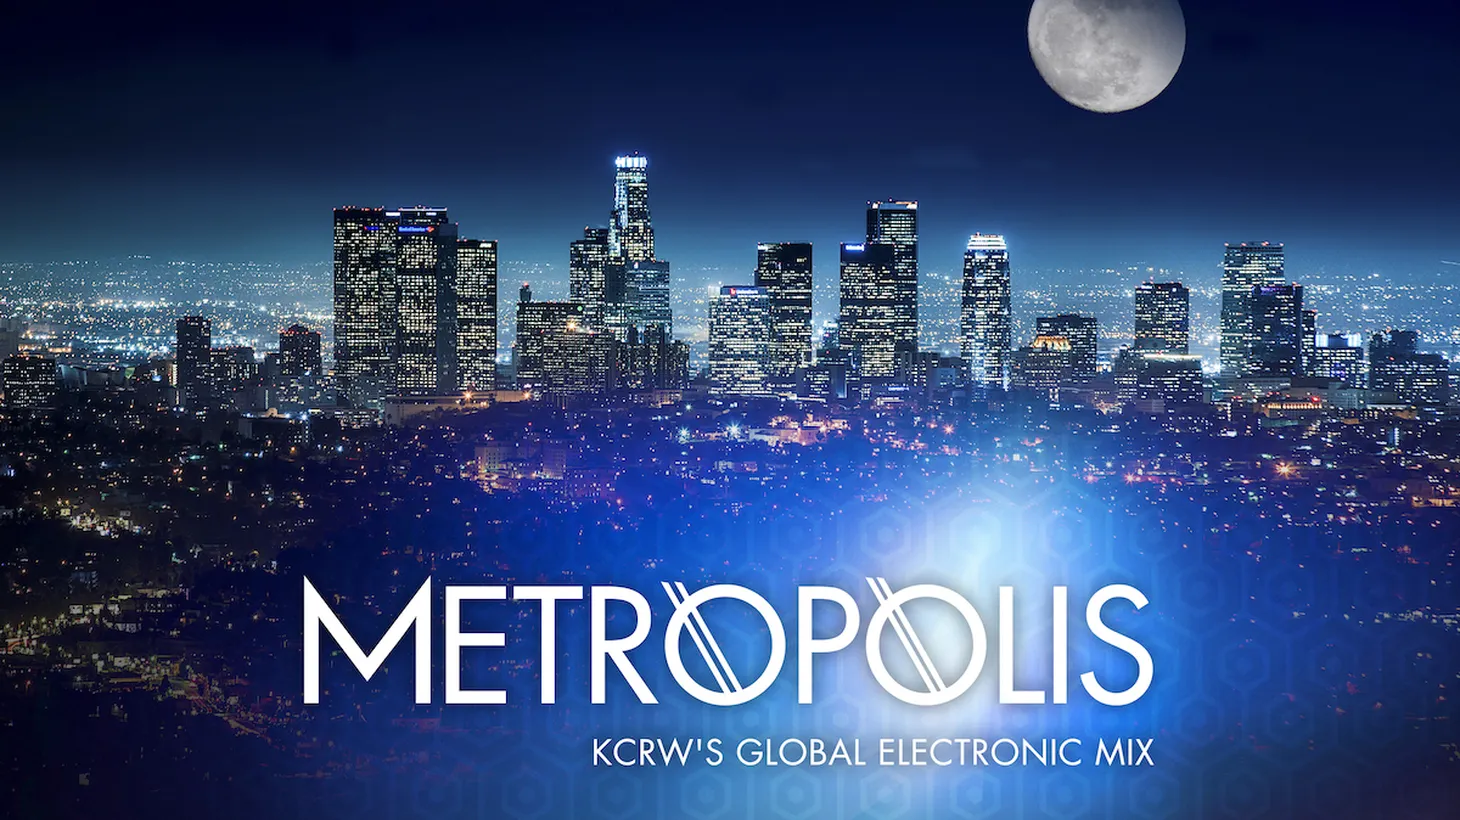 Metropolis playlist, December 5, 2020.